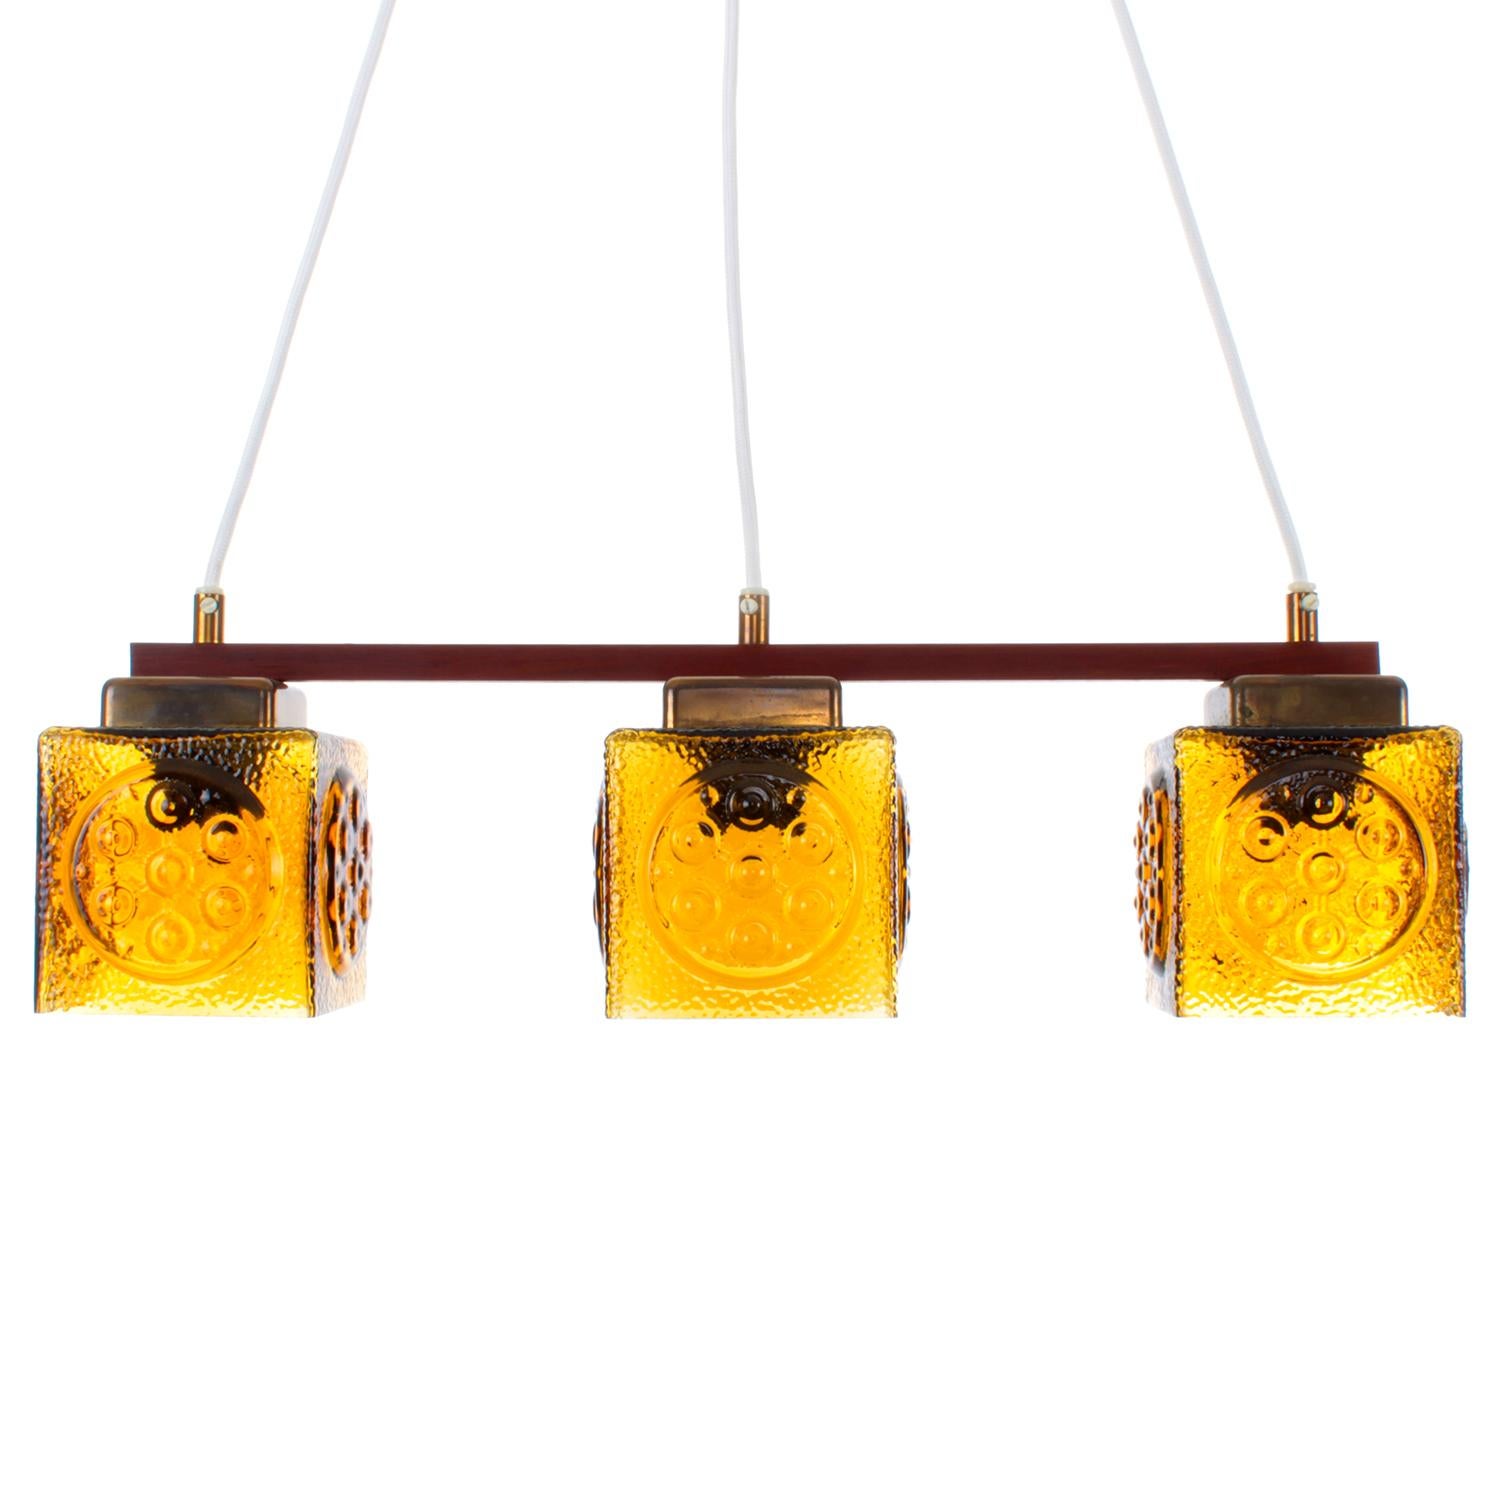 Amber Glass Hanging Light-Fixture from the 1960s, Scandinavia